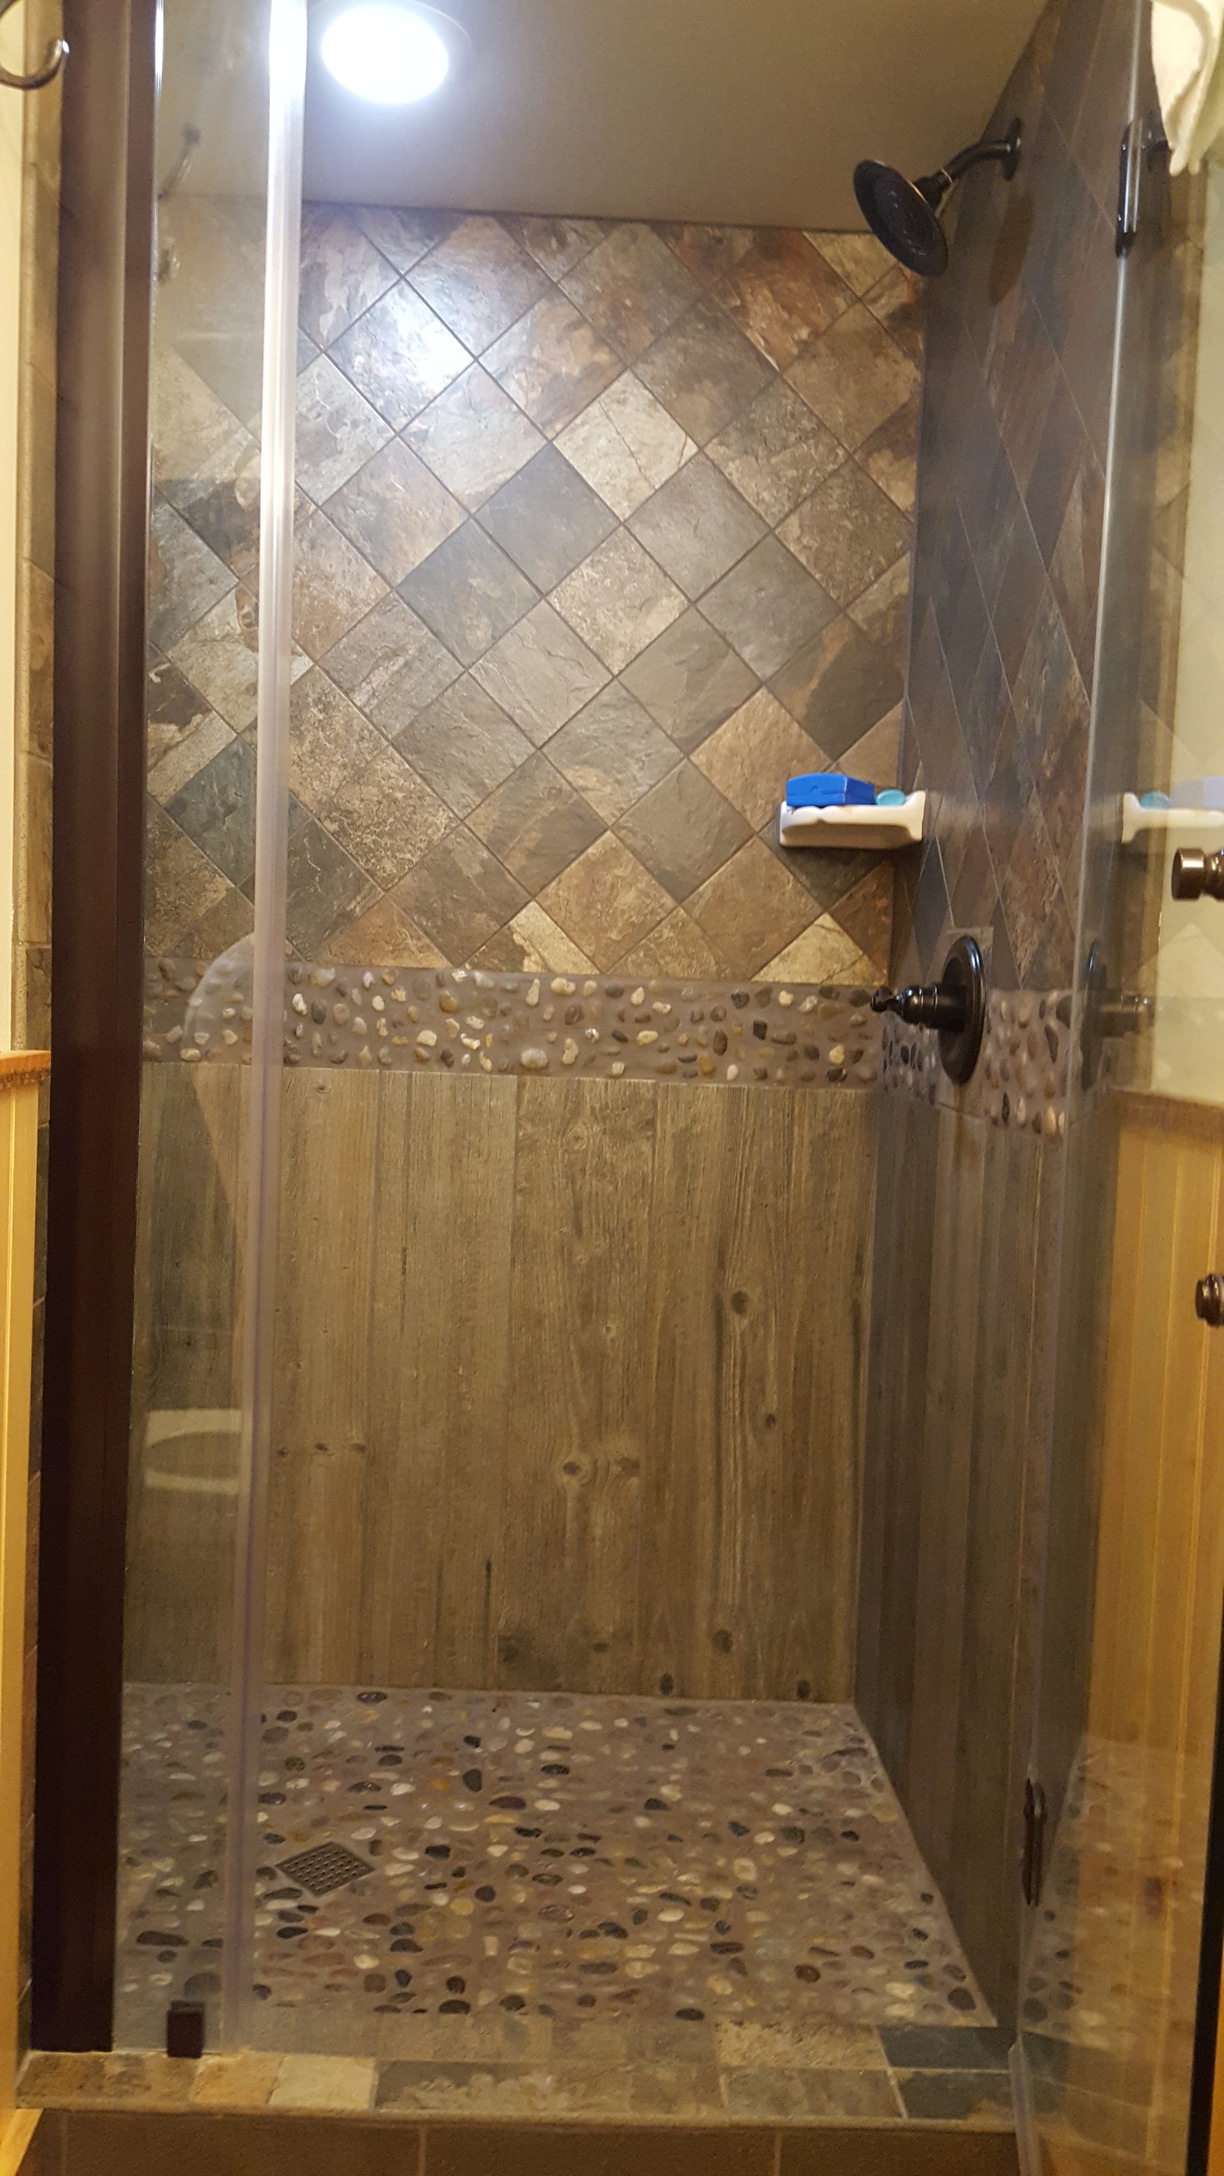 Room 7's shower at the Irondequoit Inn